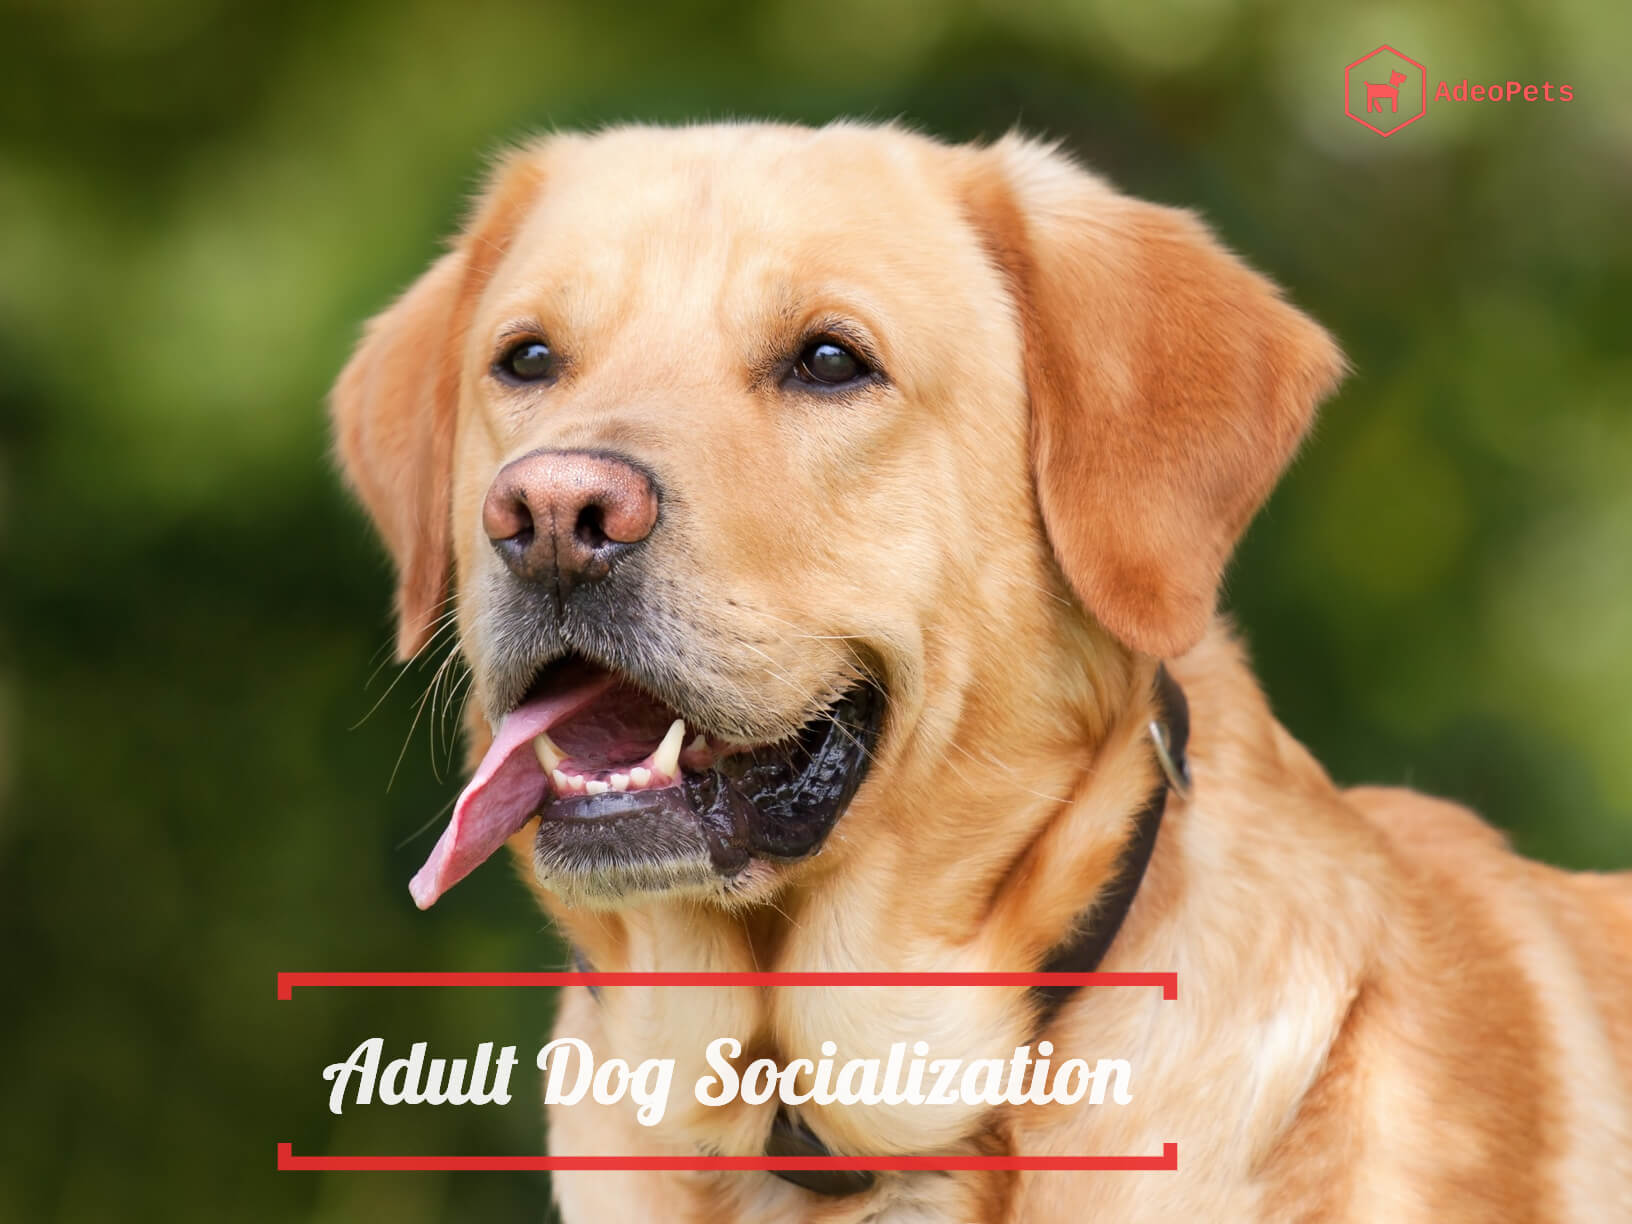 Adult Dog Socialization - Tips and Tricks